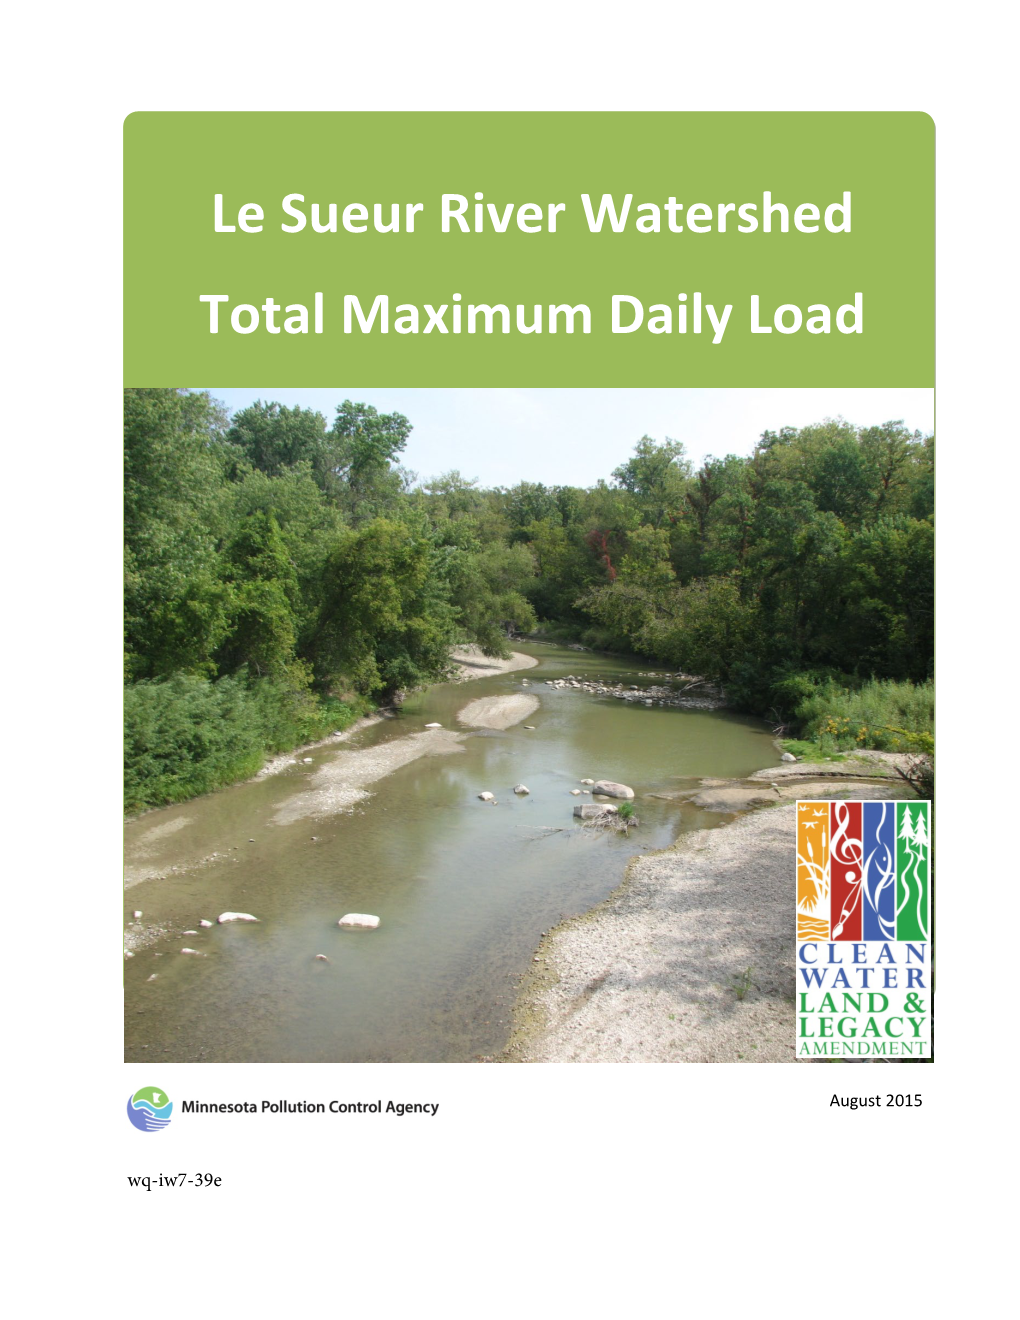 Le Sueur River Total Maximum Daily Load (TMDL)